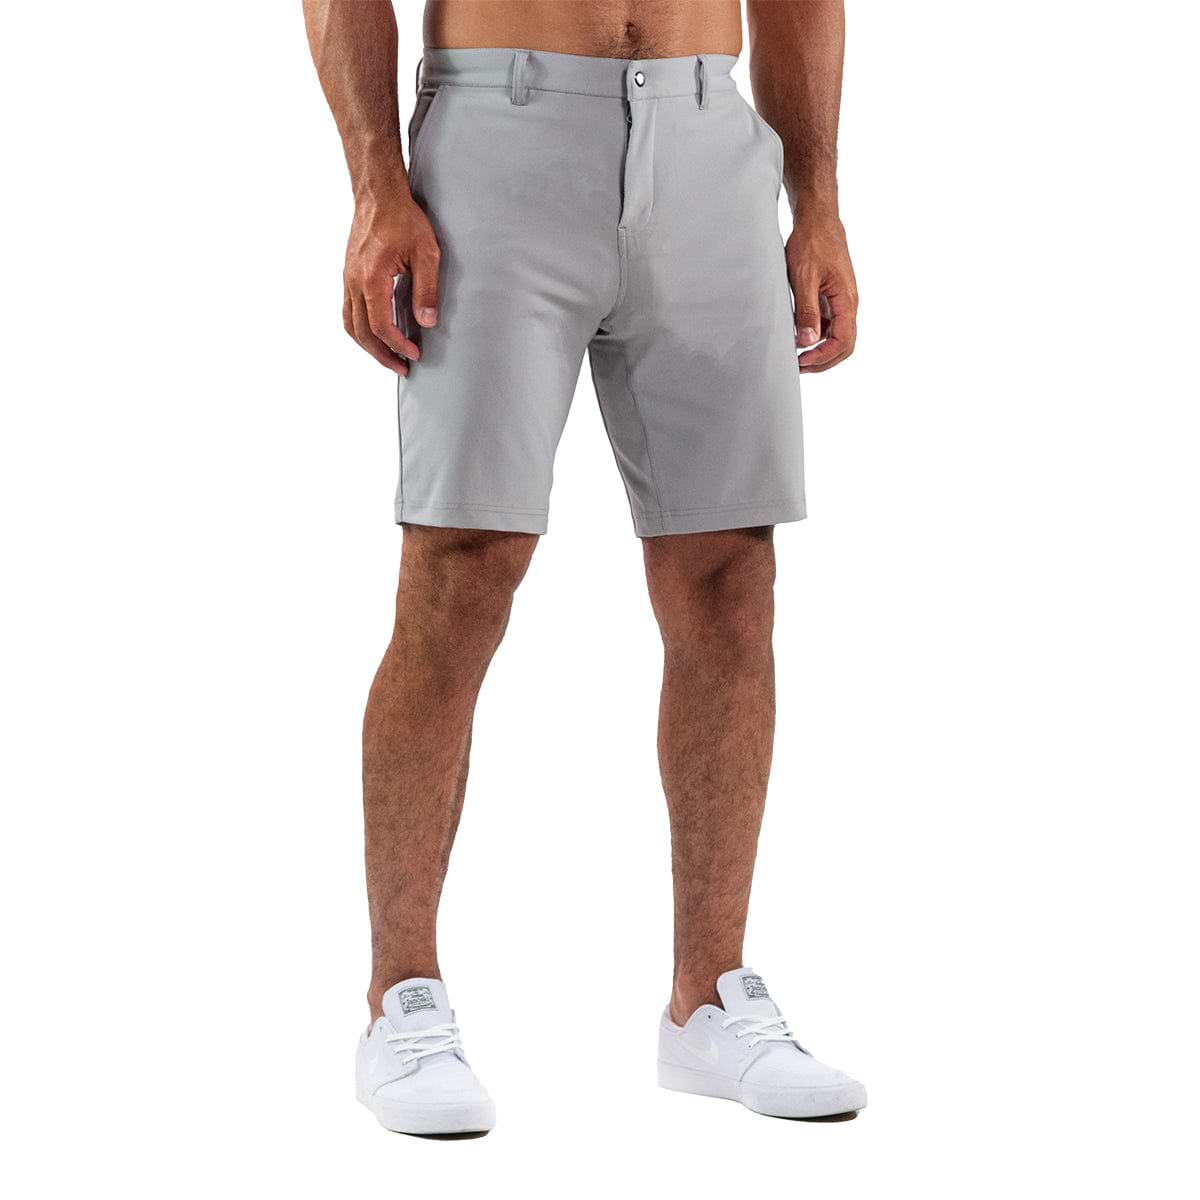 Athletic Fit Shorts - Light Grey